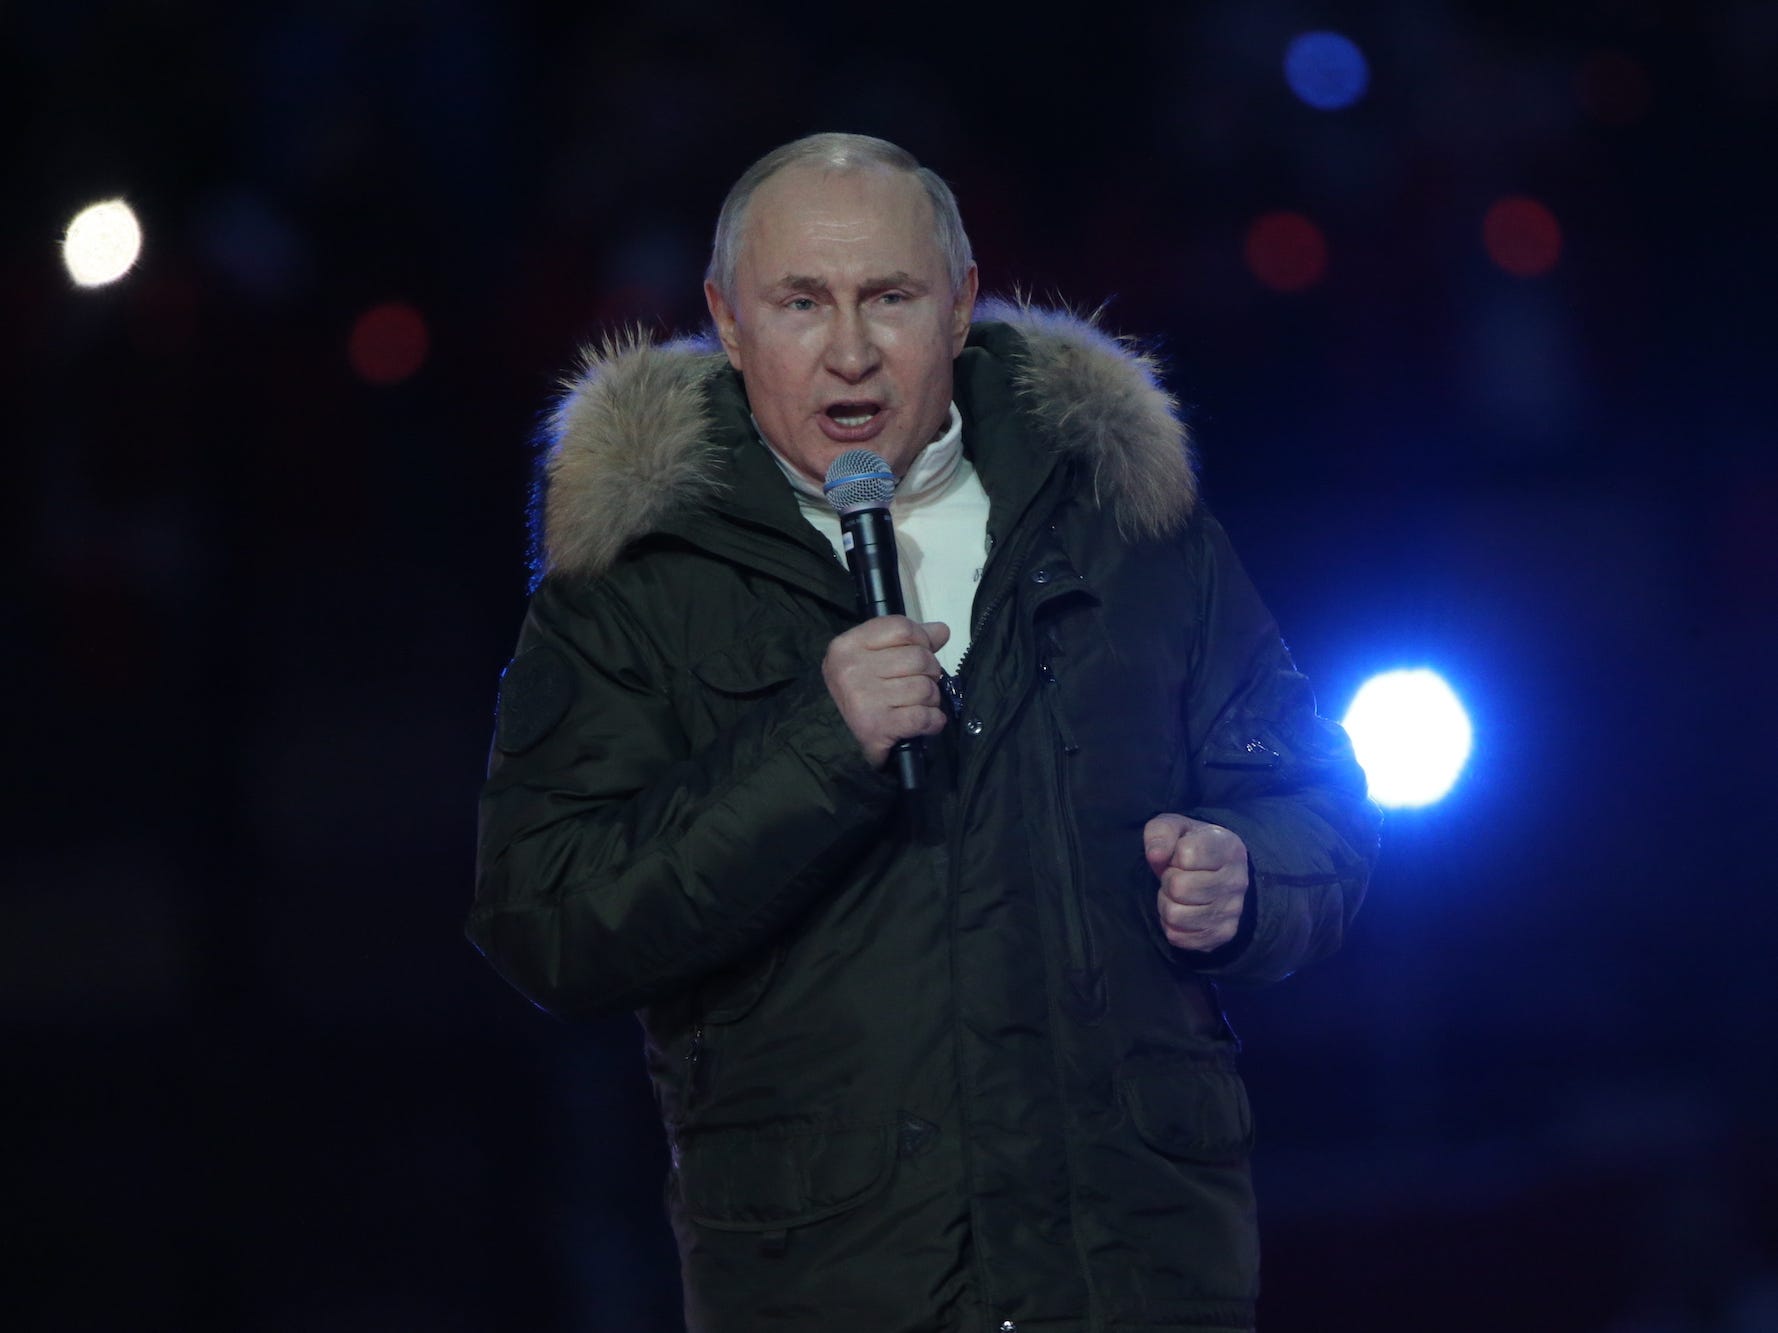 Russian President Vladimir Putin speaking into a microphone.